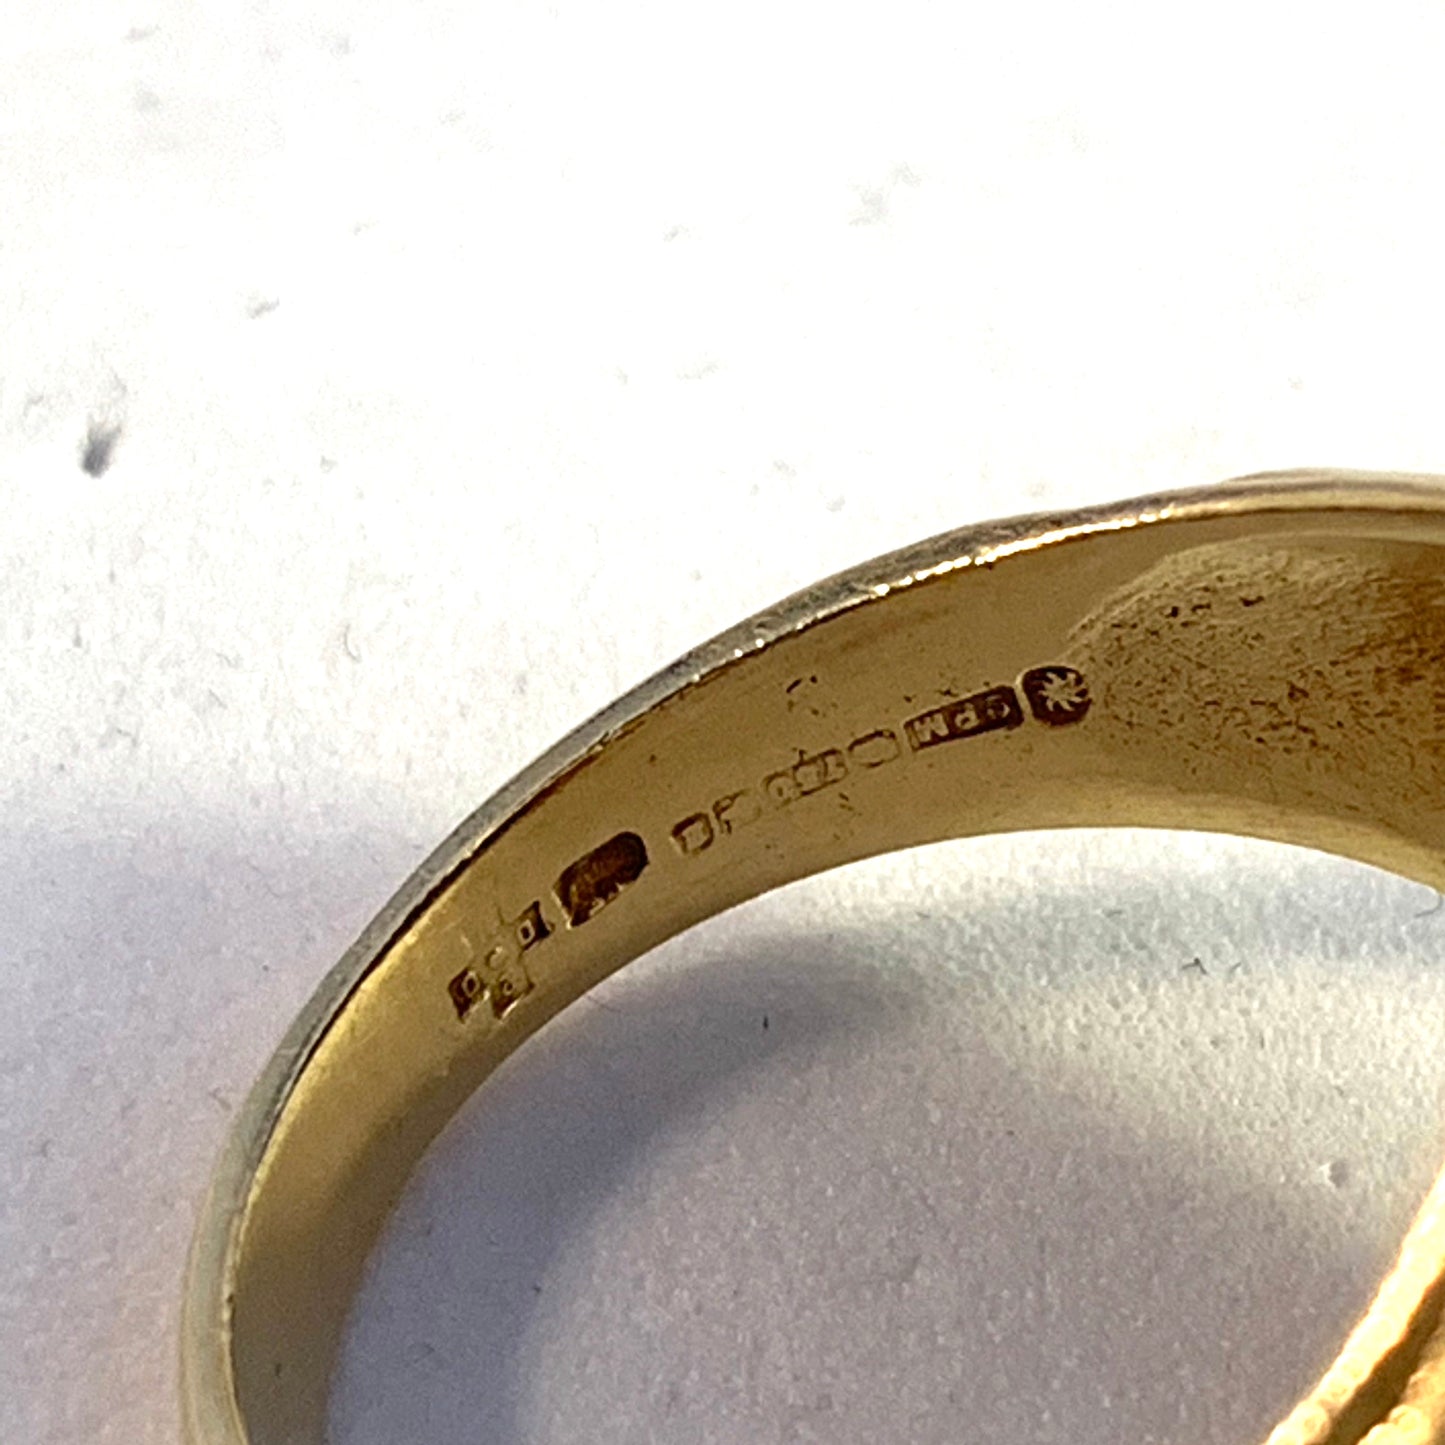 England Vintage 18k Gold Bloodstone Chunky Men's Signet Ring.